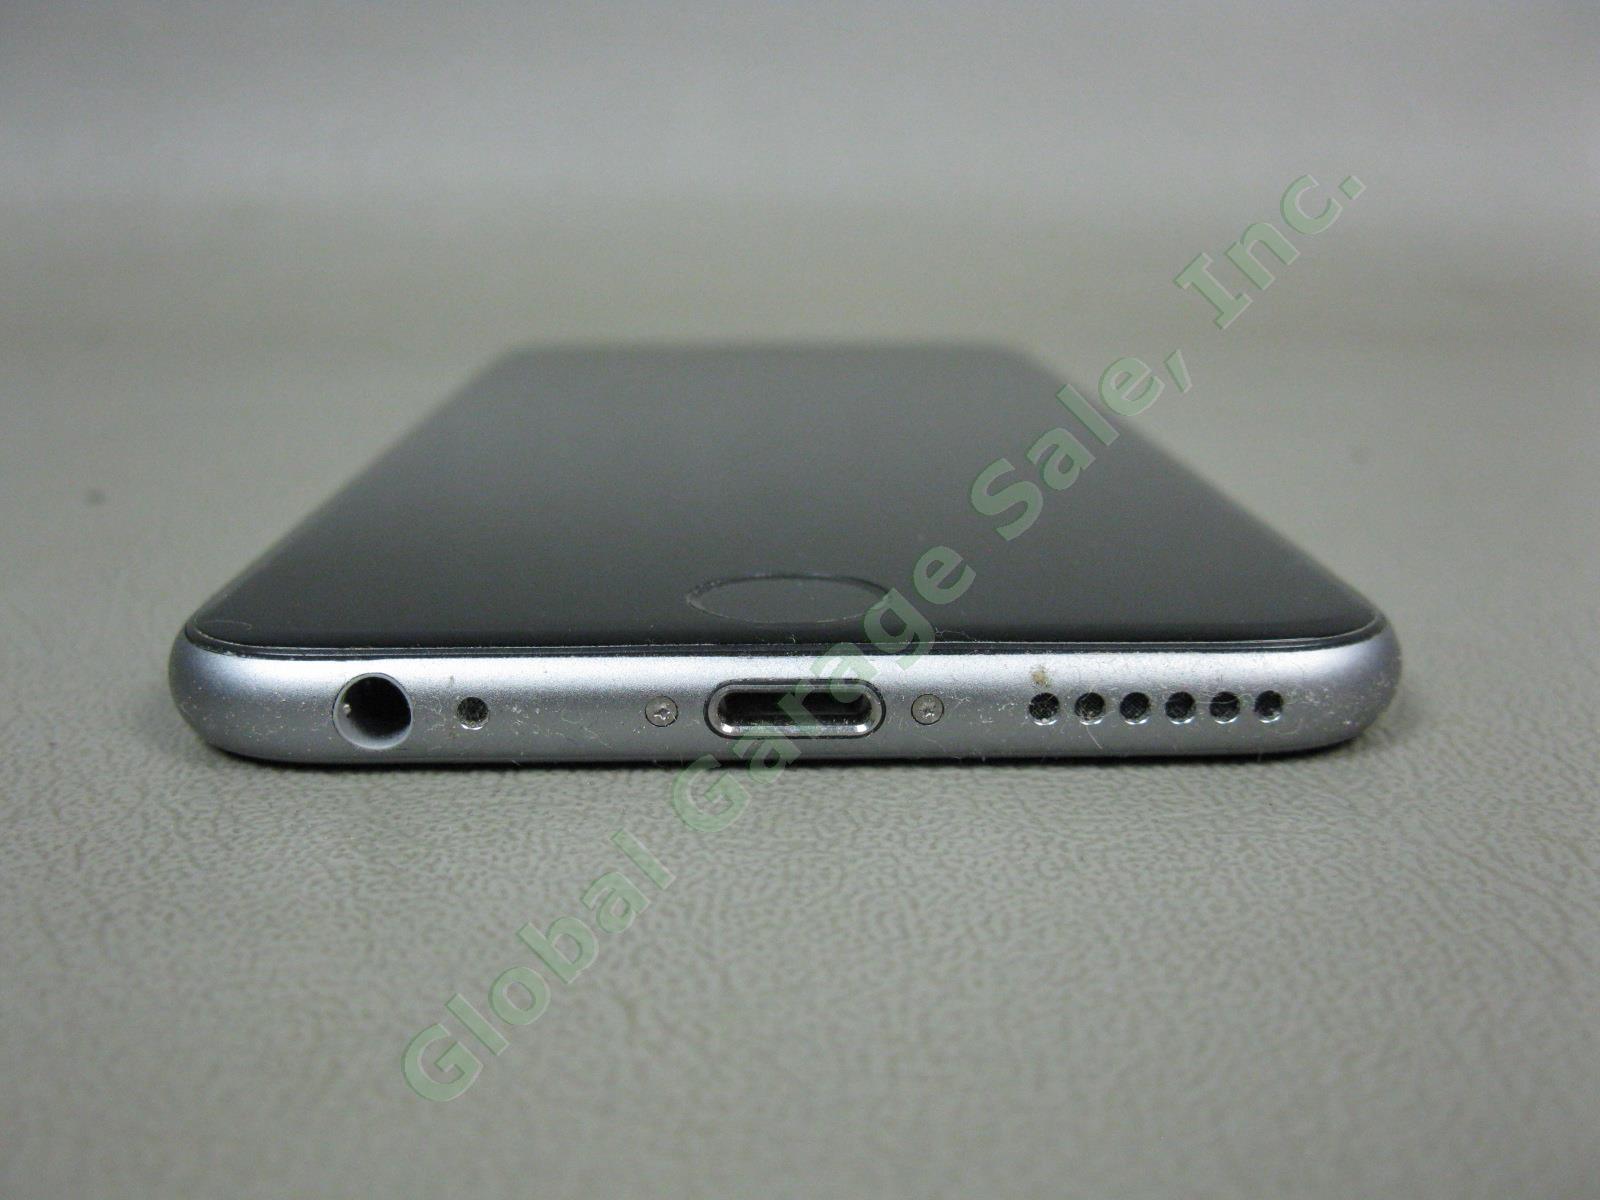 Apple iPhone 6 A1549 MG5X2LL/A Verizon 128GB? No Power For Repair Perfect Screen 2